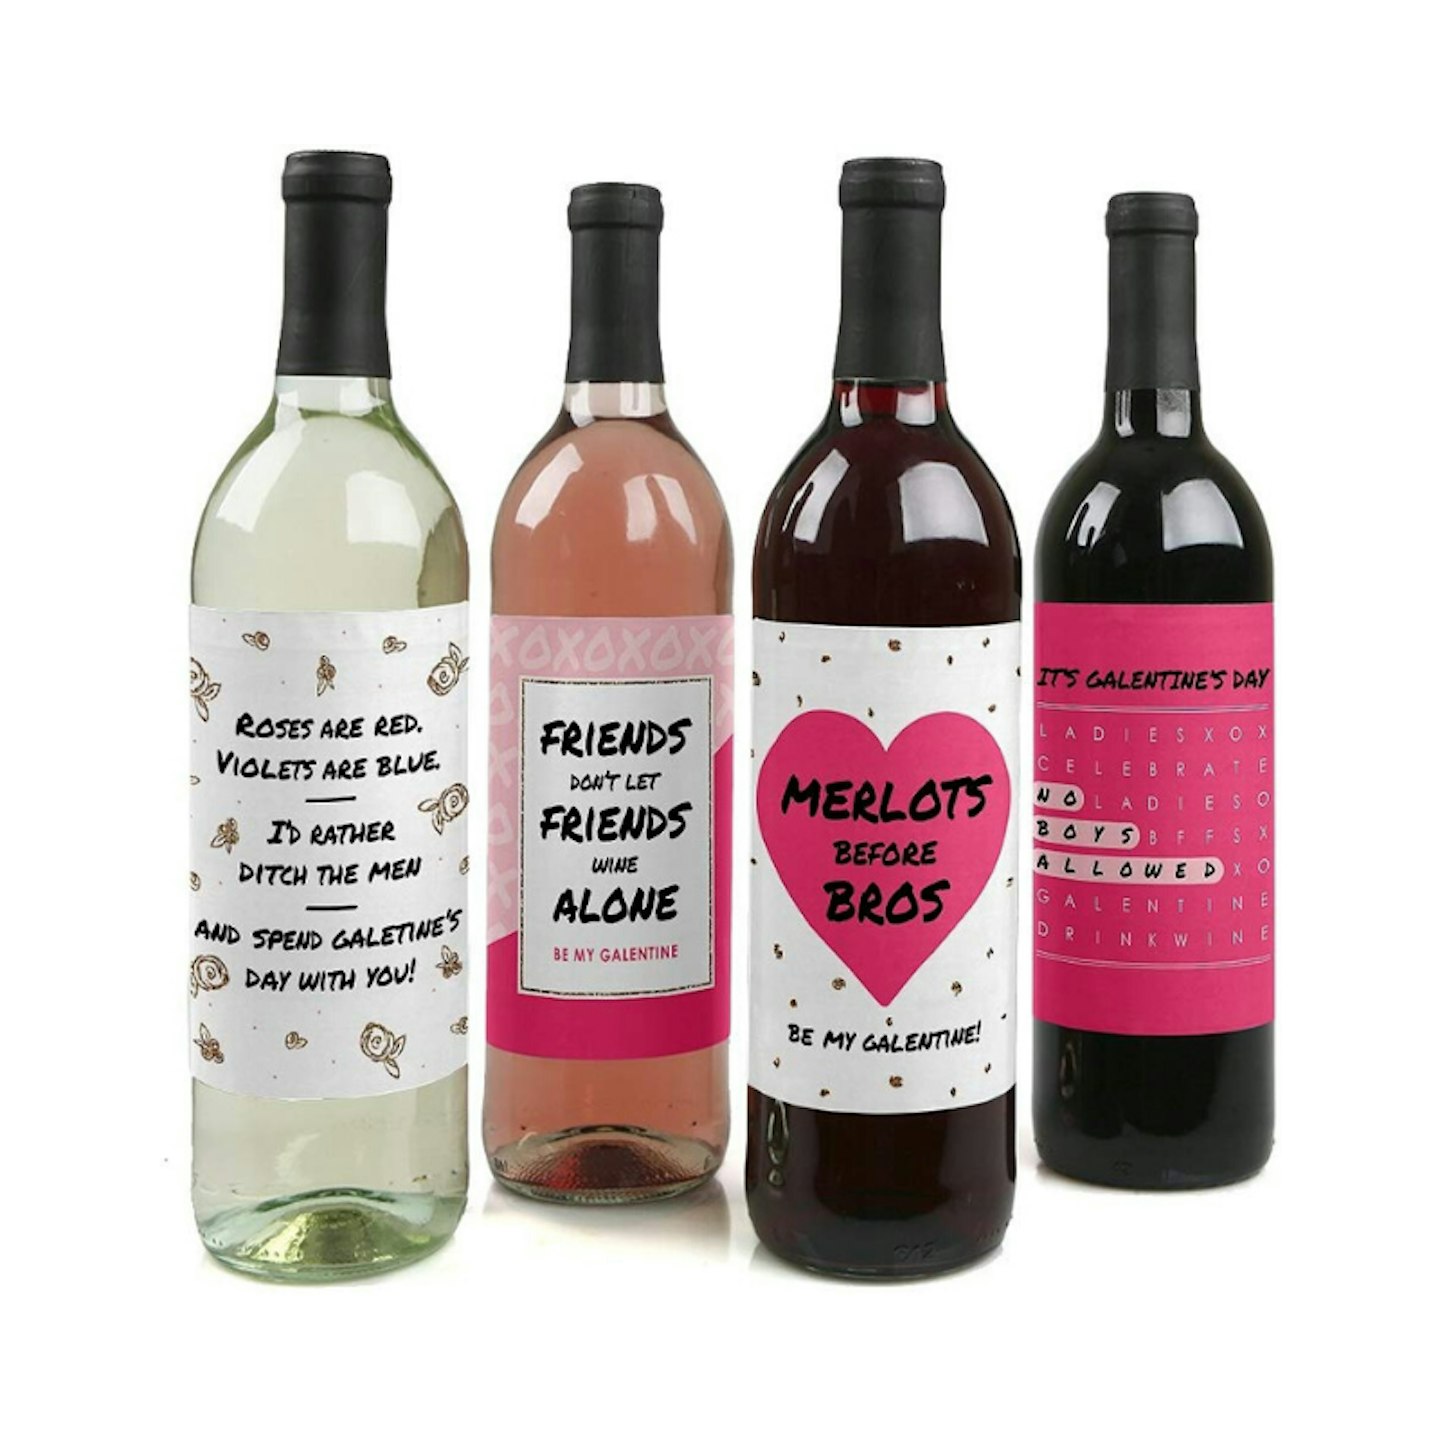 Be My Galentine - Valentine's Day Wine Bottle Labels - Set of 4